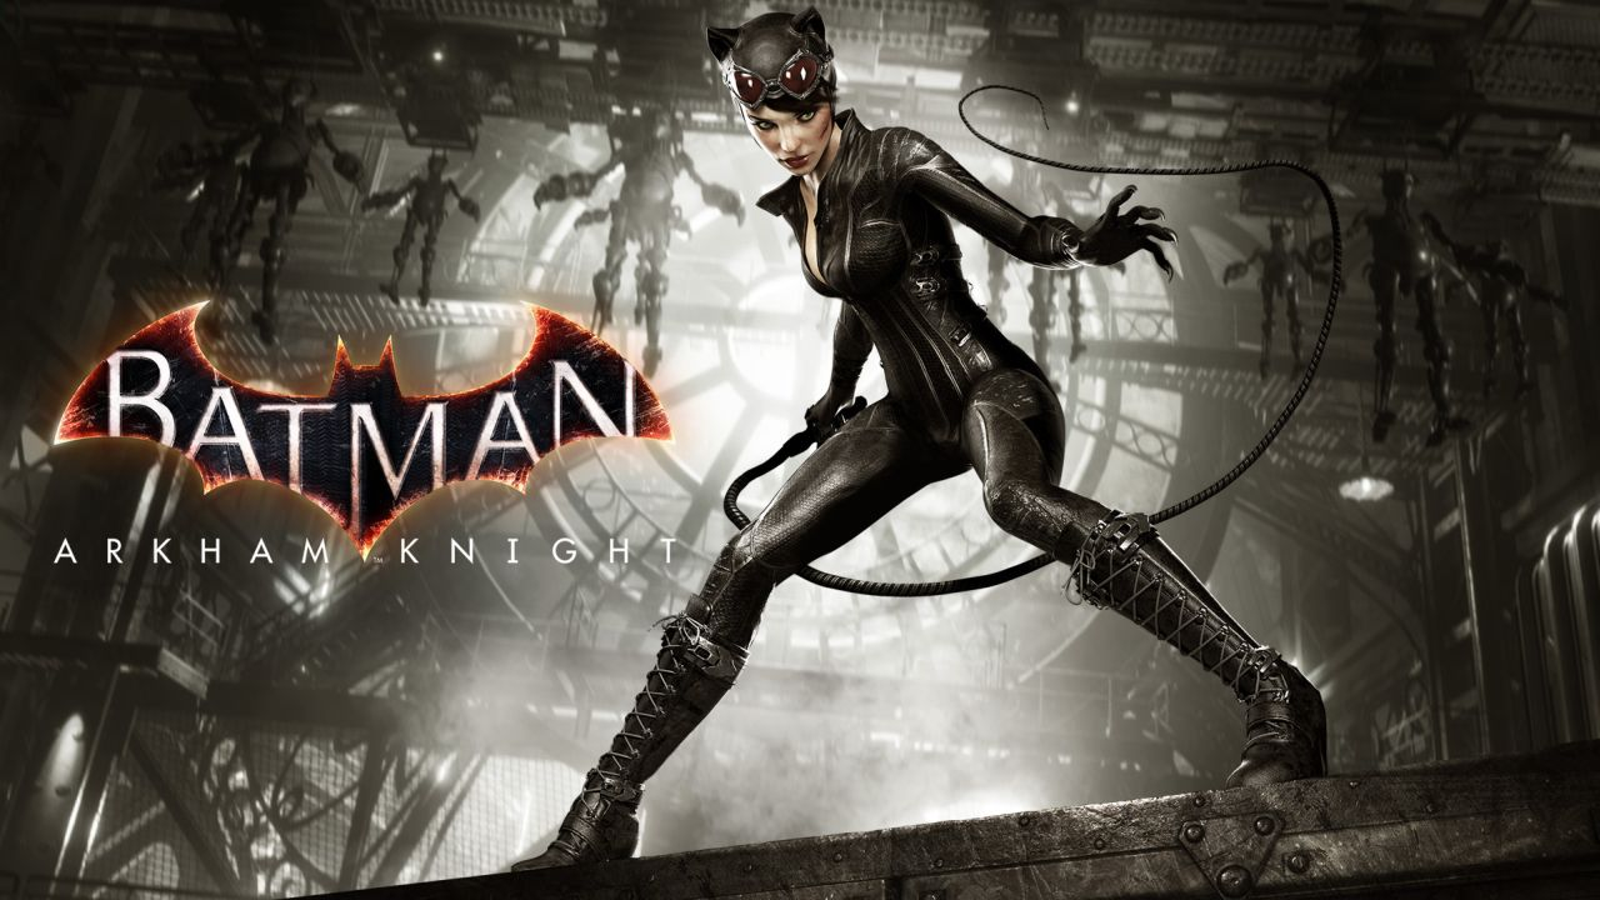 Batman: Arkham Knight October DLC includes Catwoman's Revenge story pack |  VG247